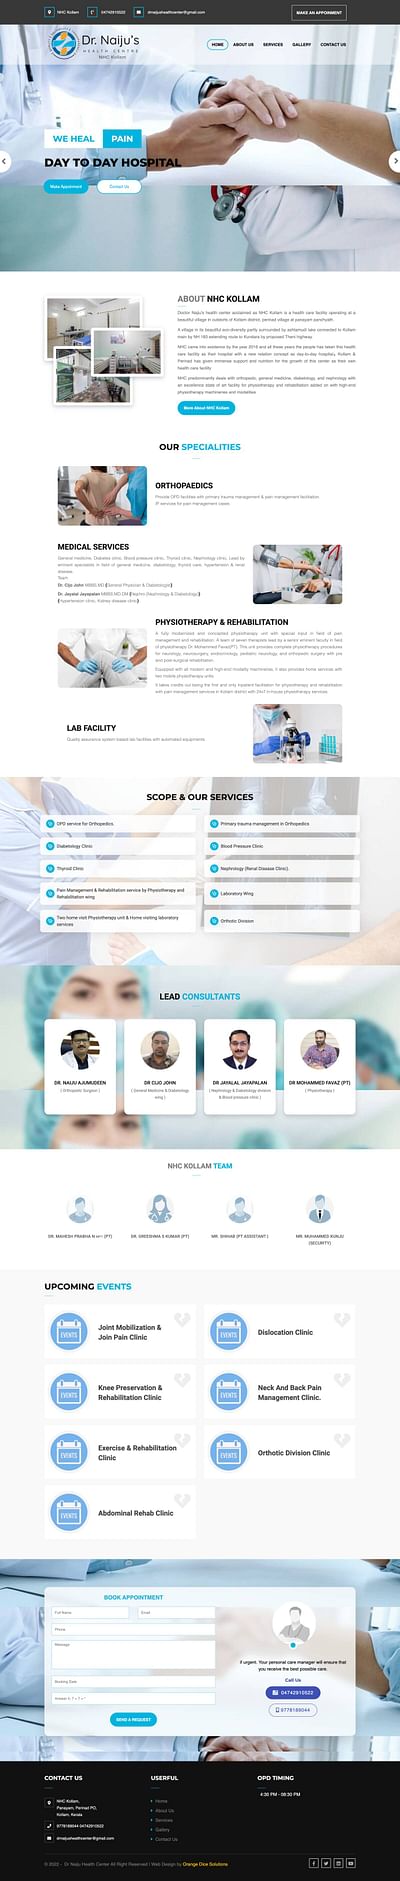 Website developed for NHC hospital Kollam - Onlinewerbung